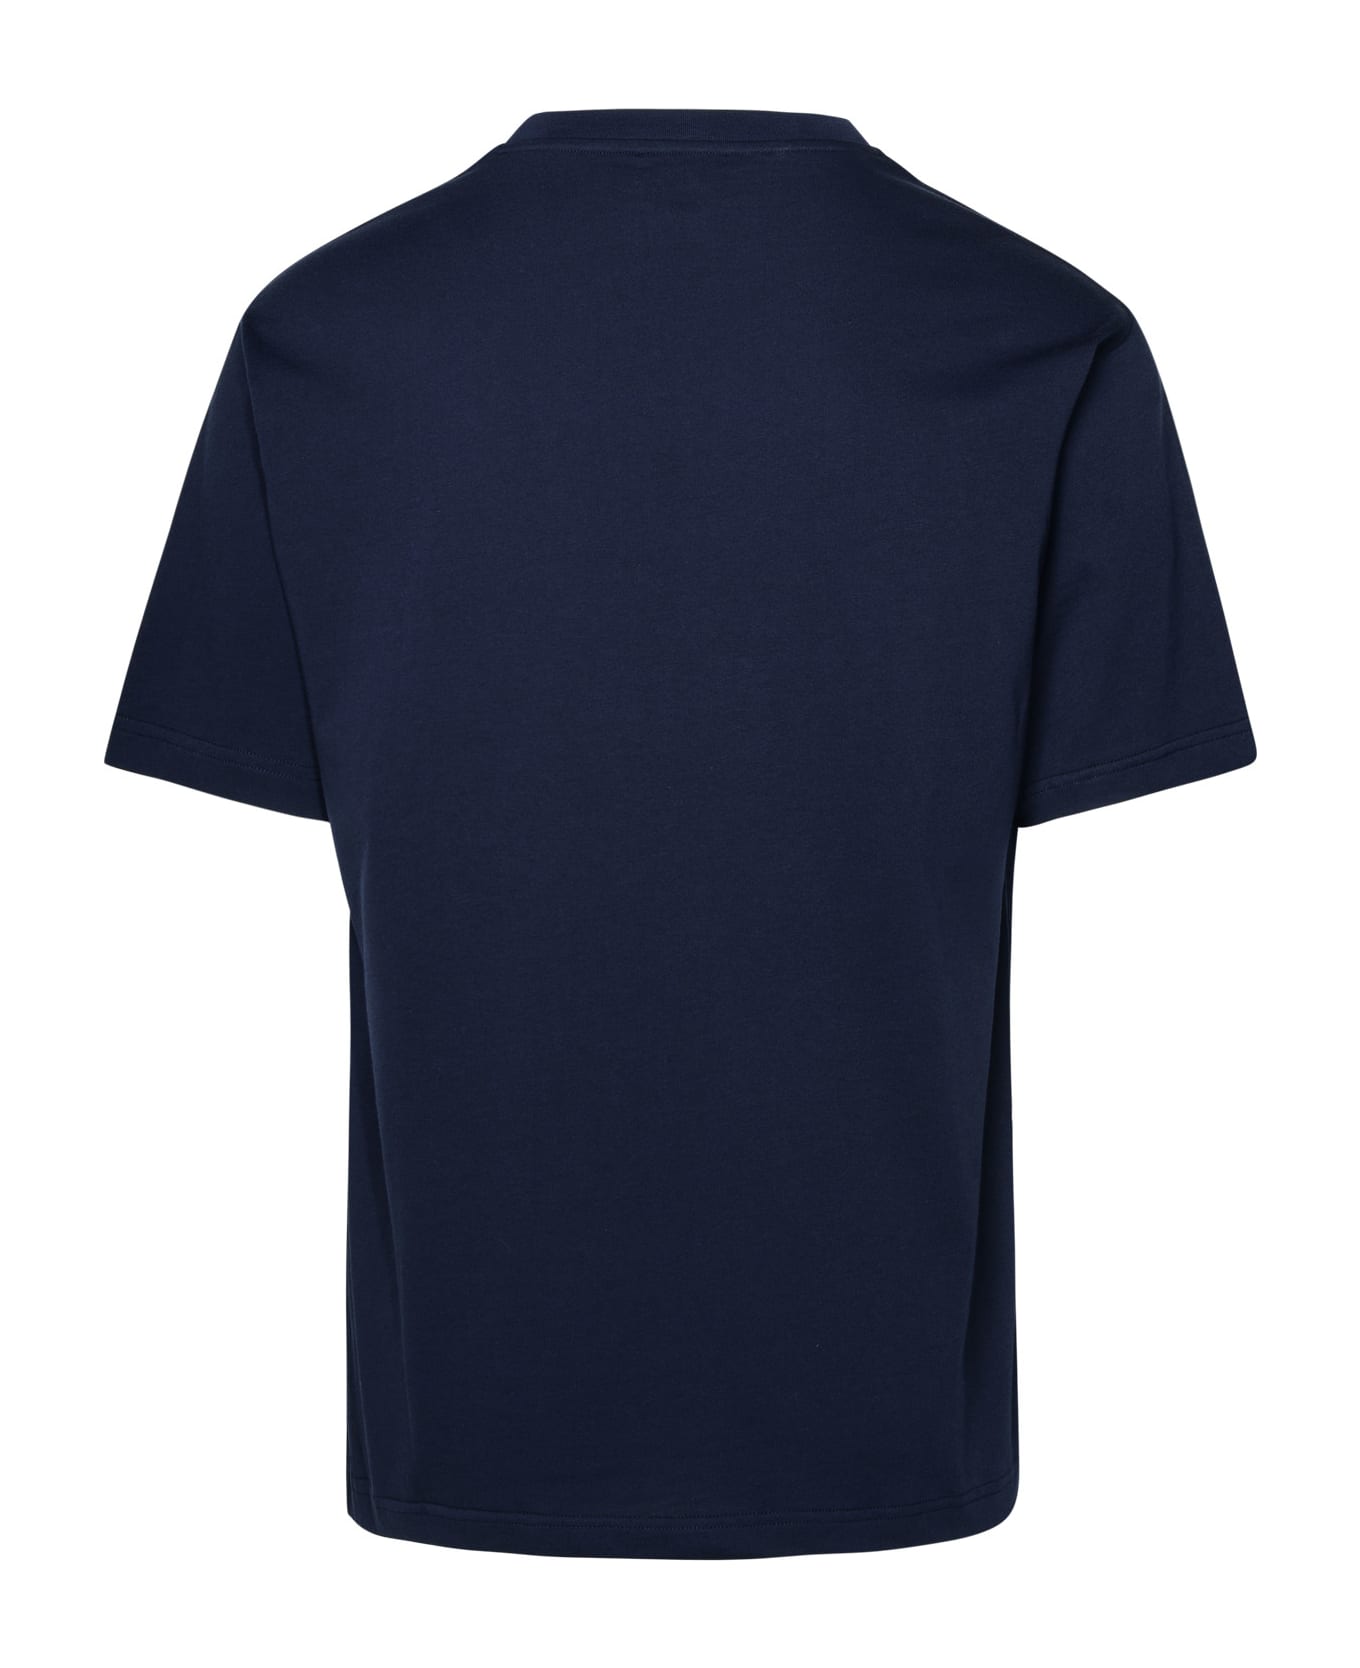 A.P.C. Blue Cotton T-shirt - Navy